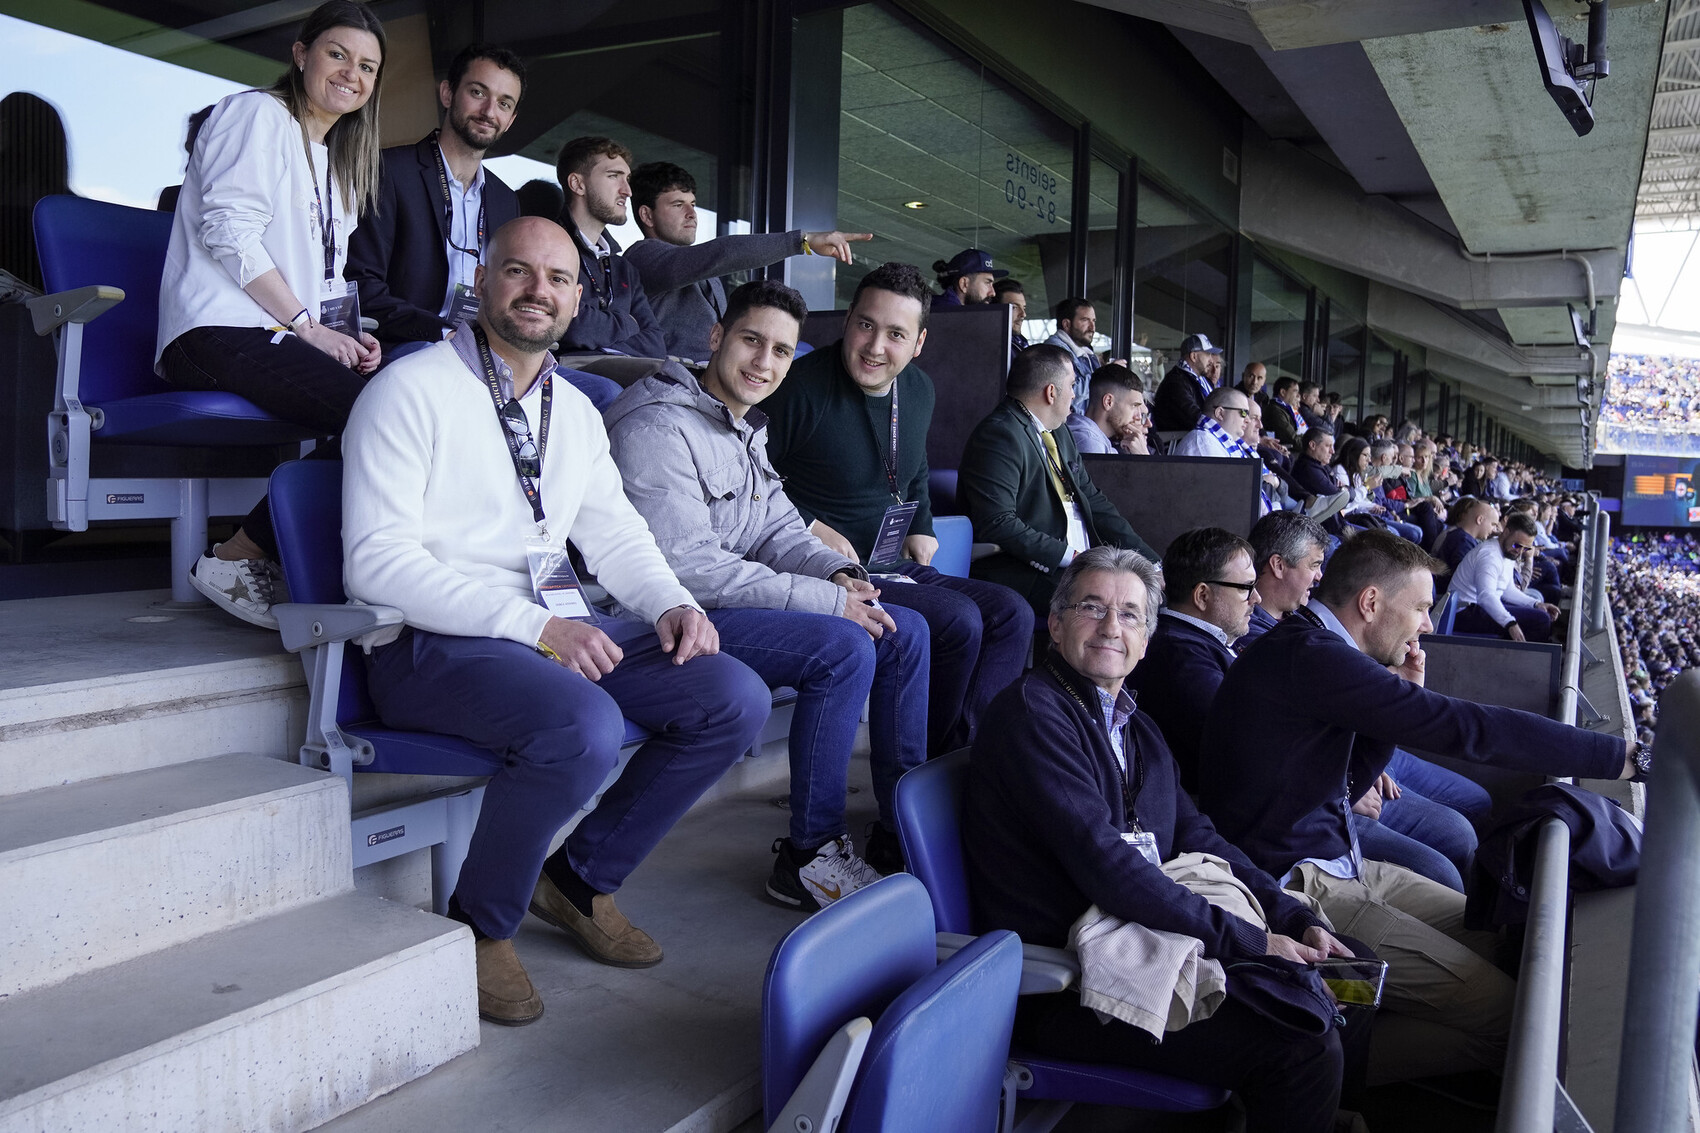 Club de Negocis members visit Espanyol stadium